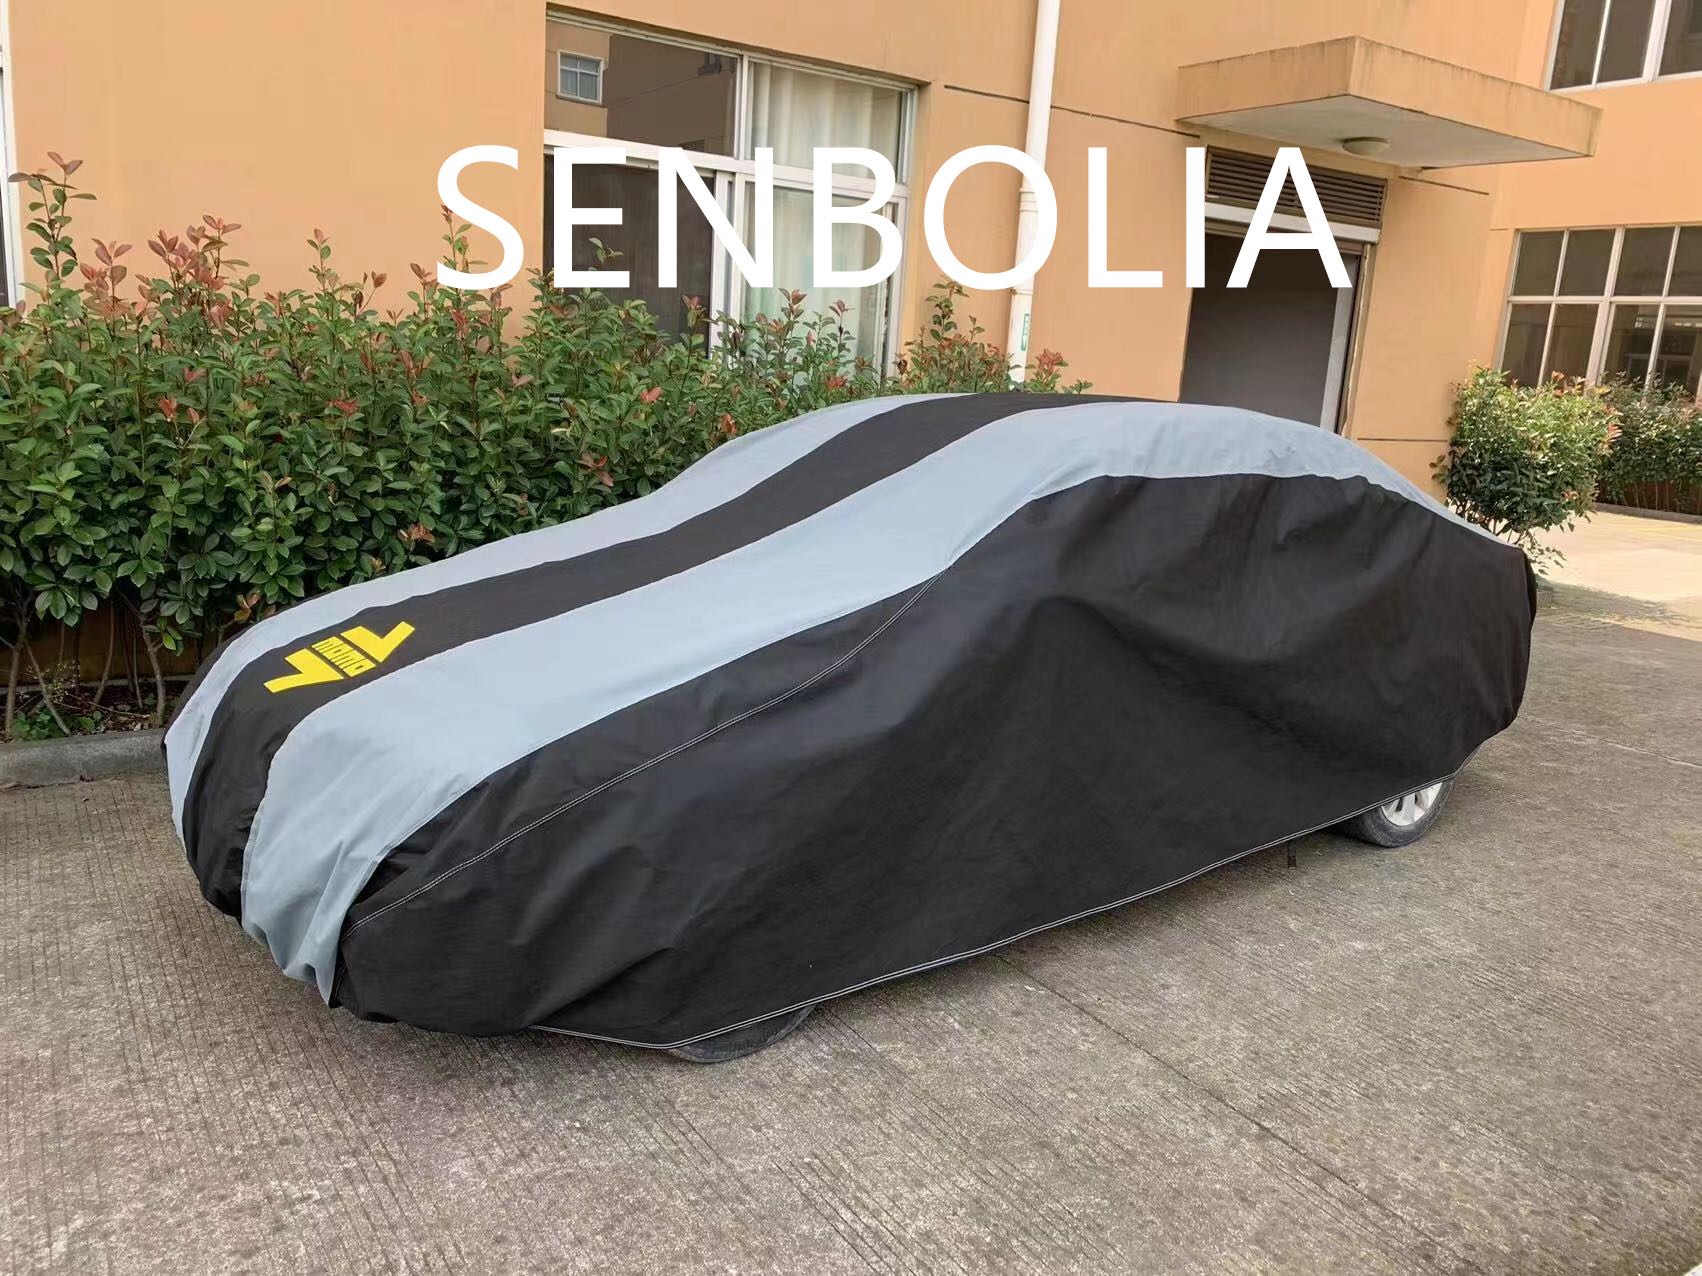 senbolia-1汽车 车衣 防嗮 防雨 四季通用 厂家直销欢迎前来采购汽车用品详情图3